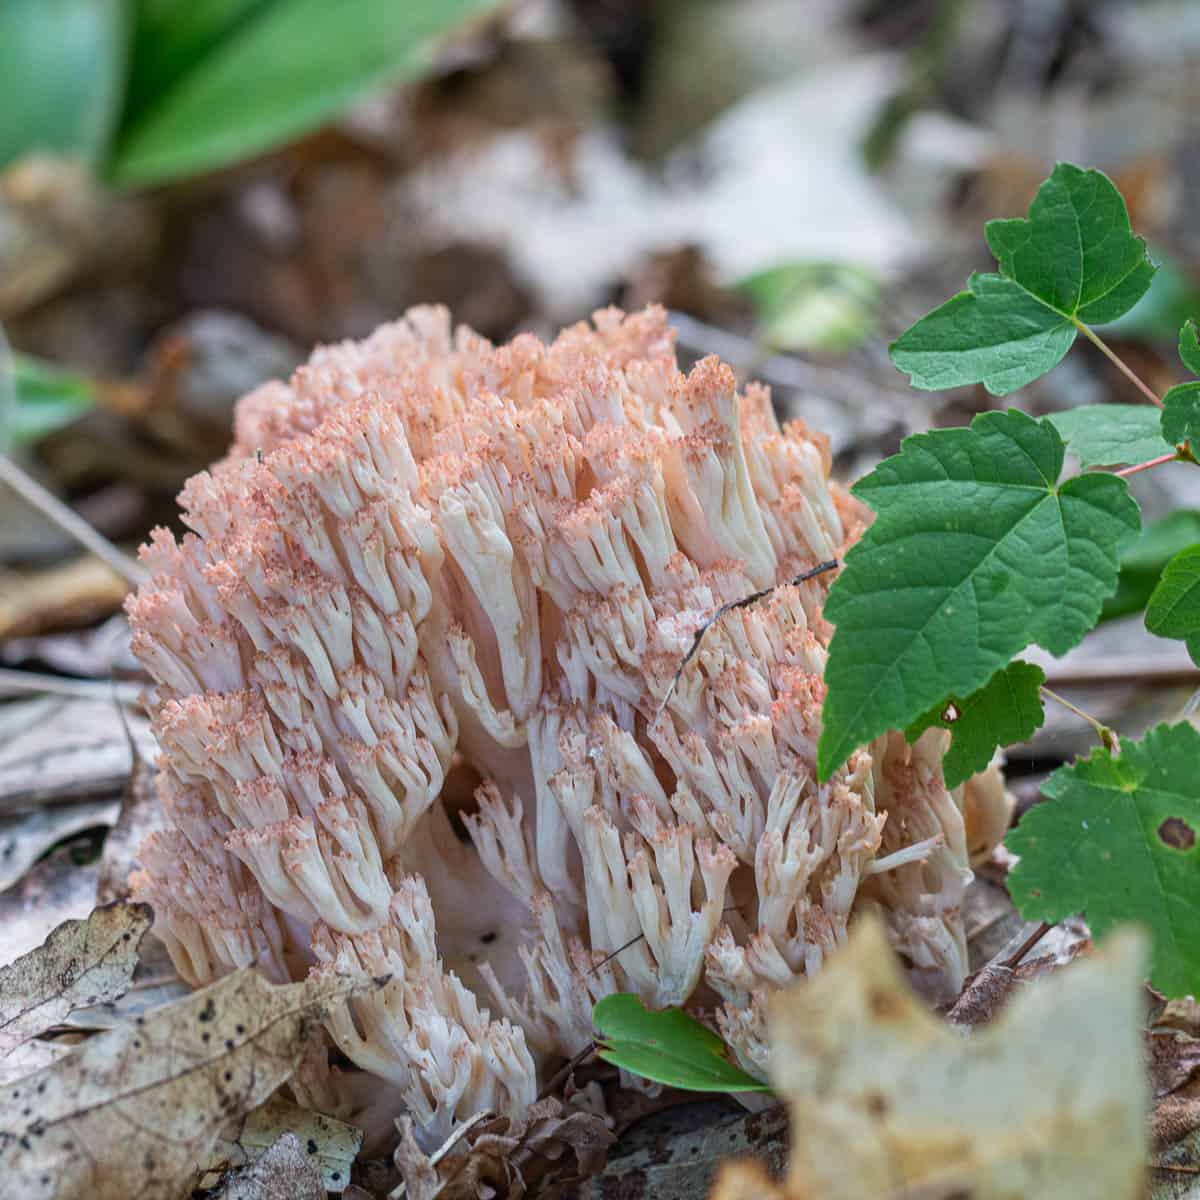 a ramaria mushroom